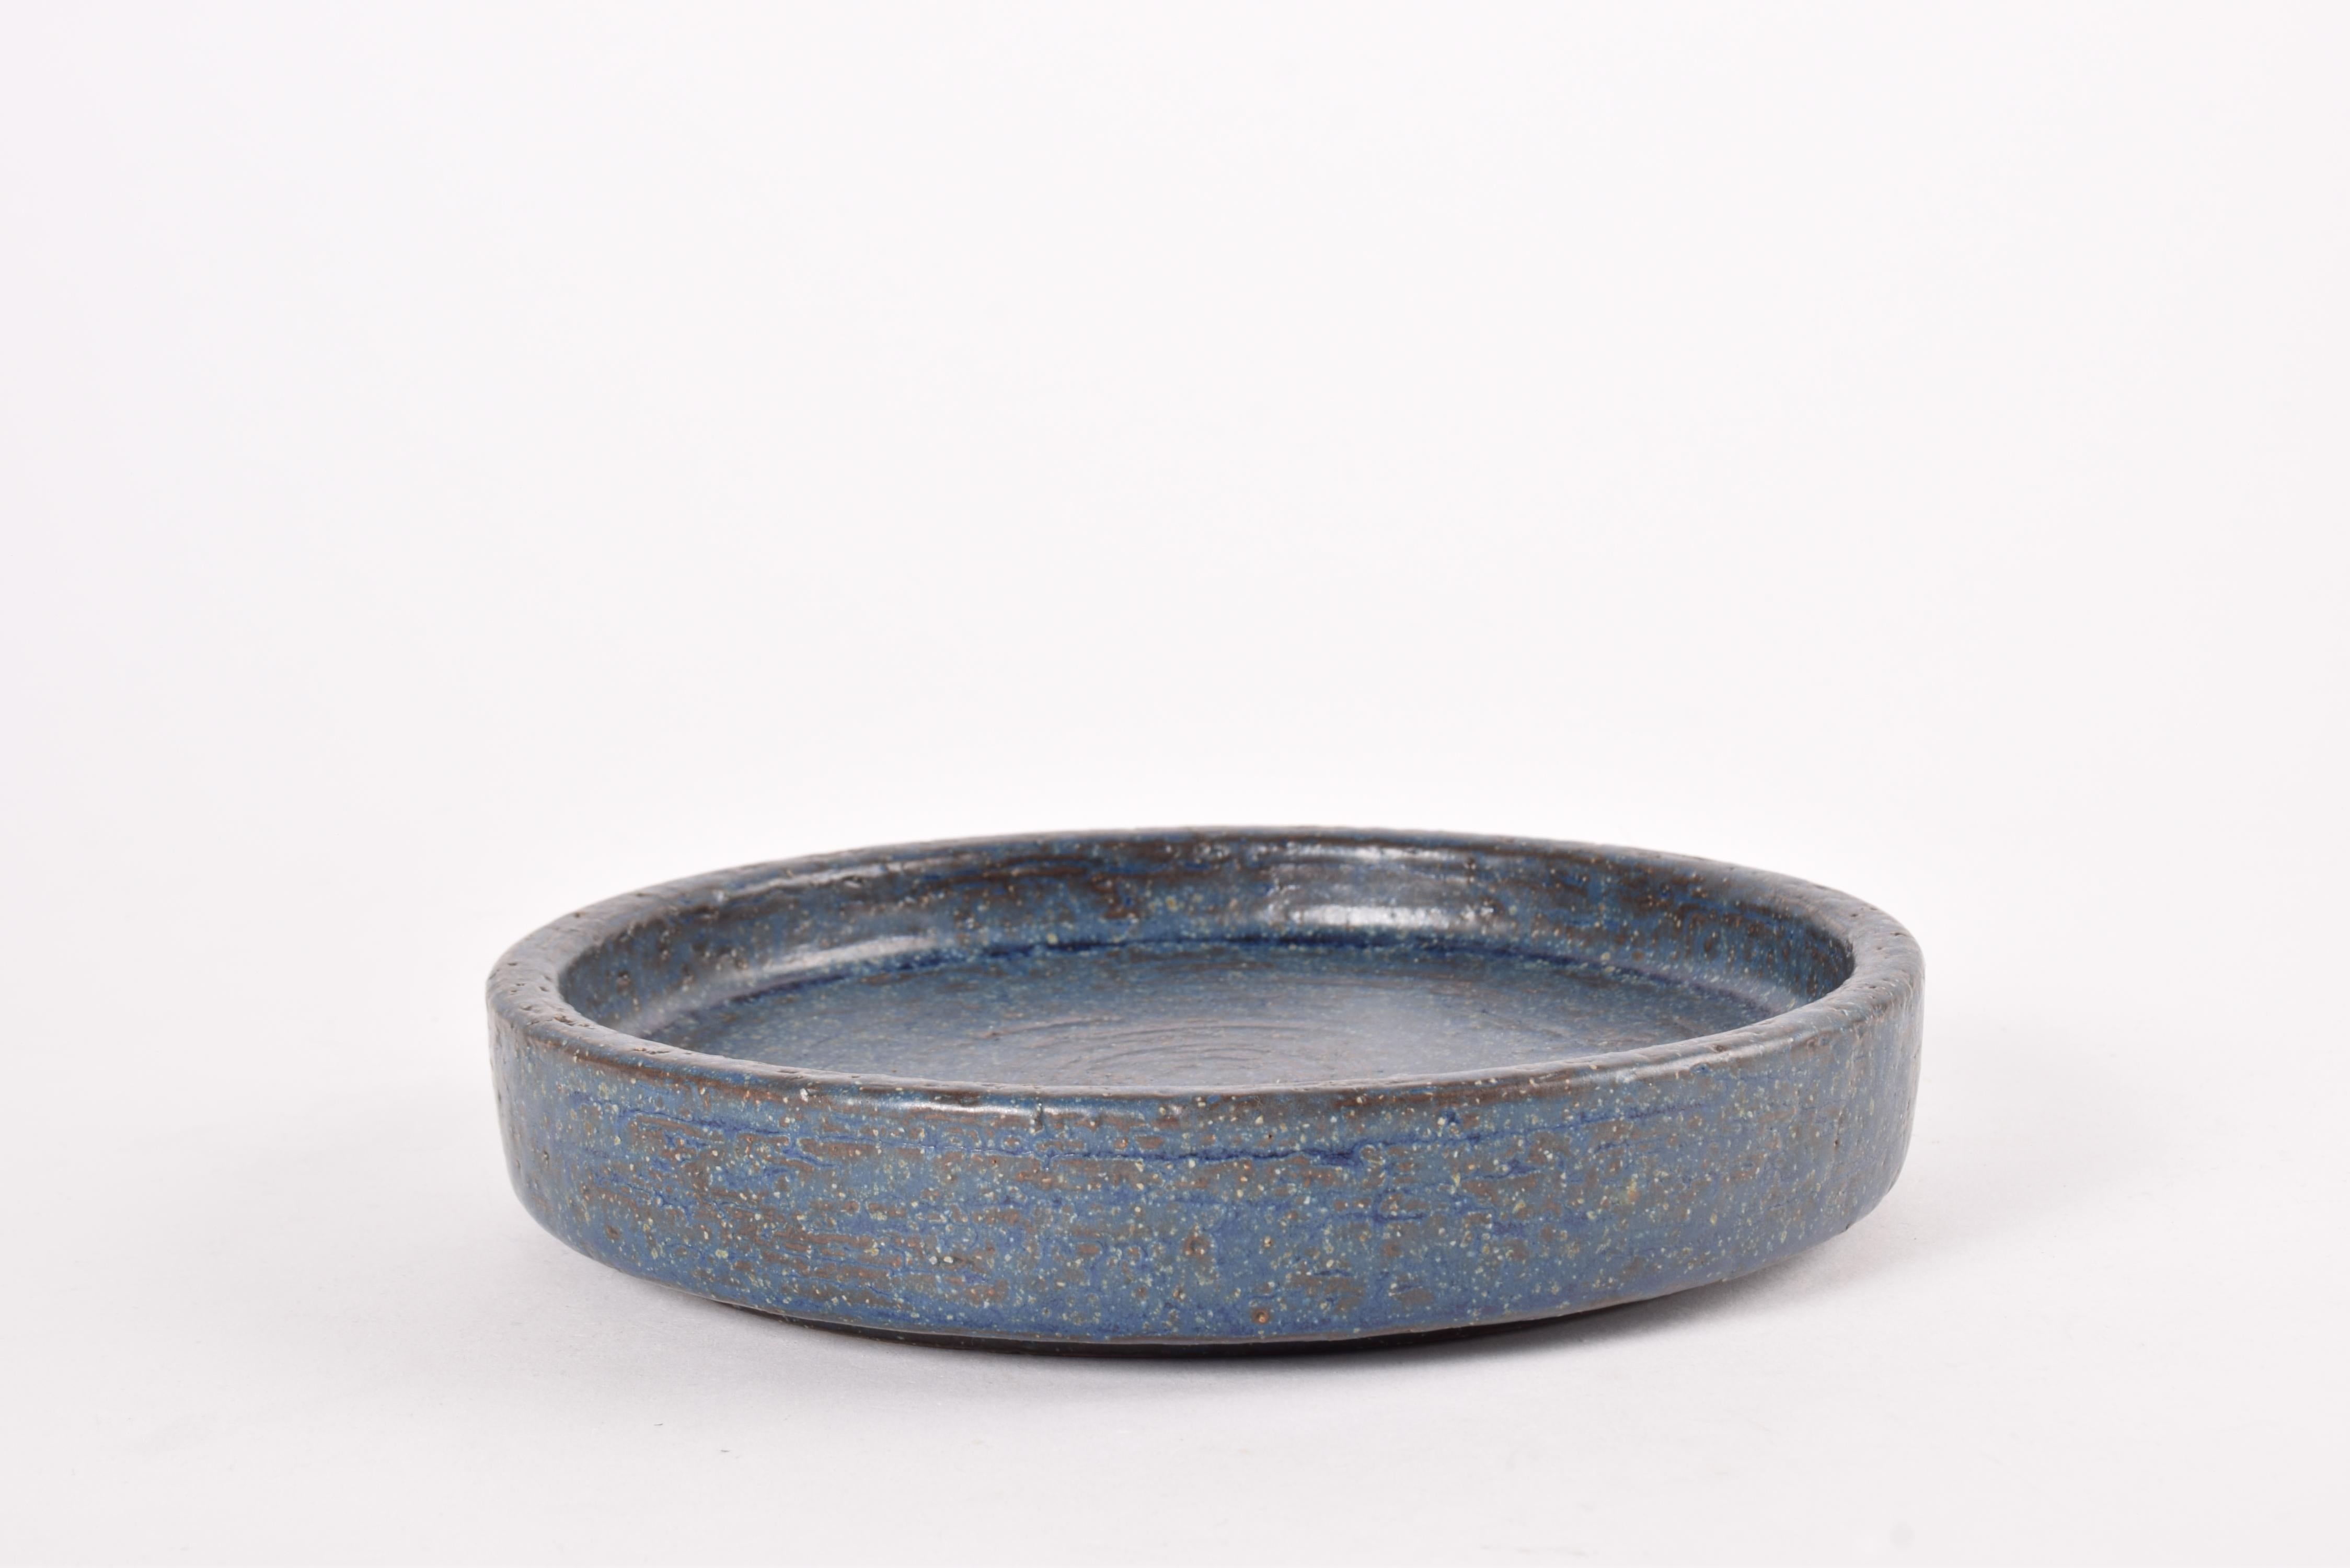 Glazed Palshus Low Round Bowl Dish with Dark Blue Glaze, Danish Modern Ceramic 1960s